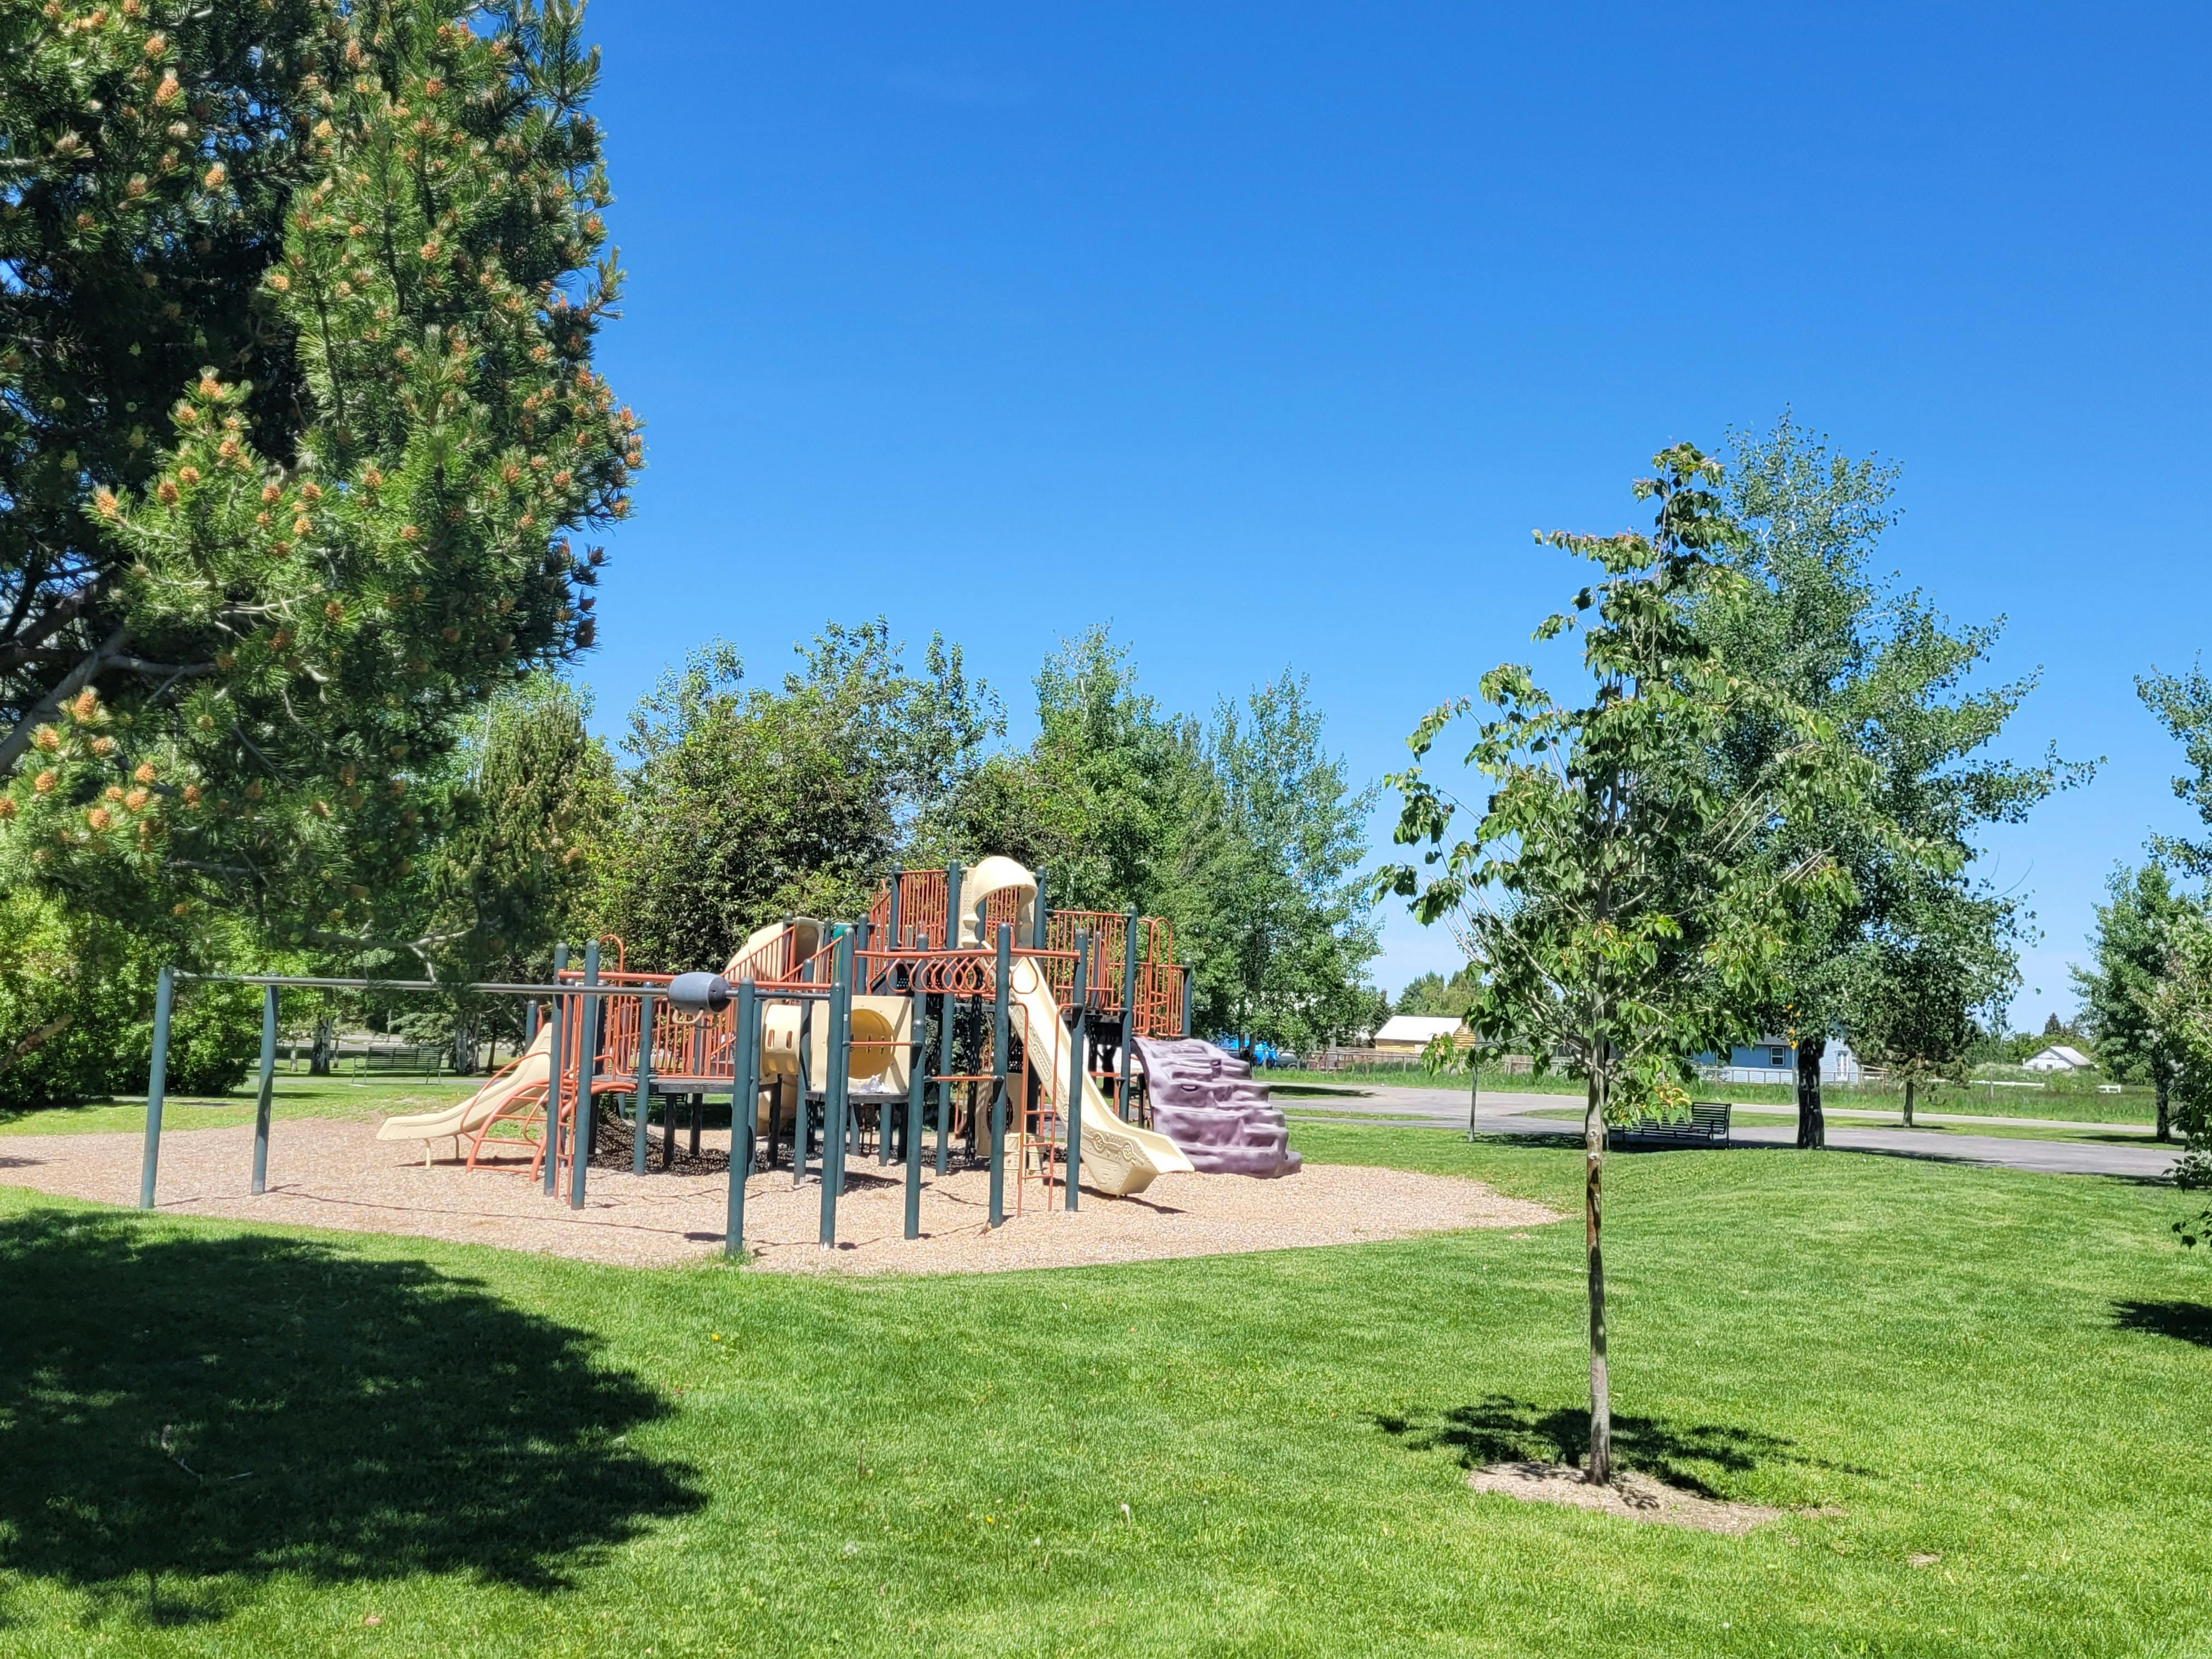 Playground at Sherman Park